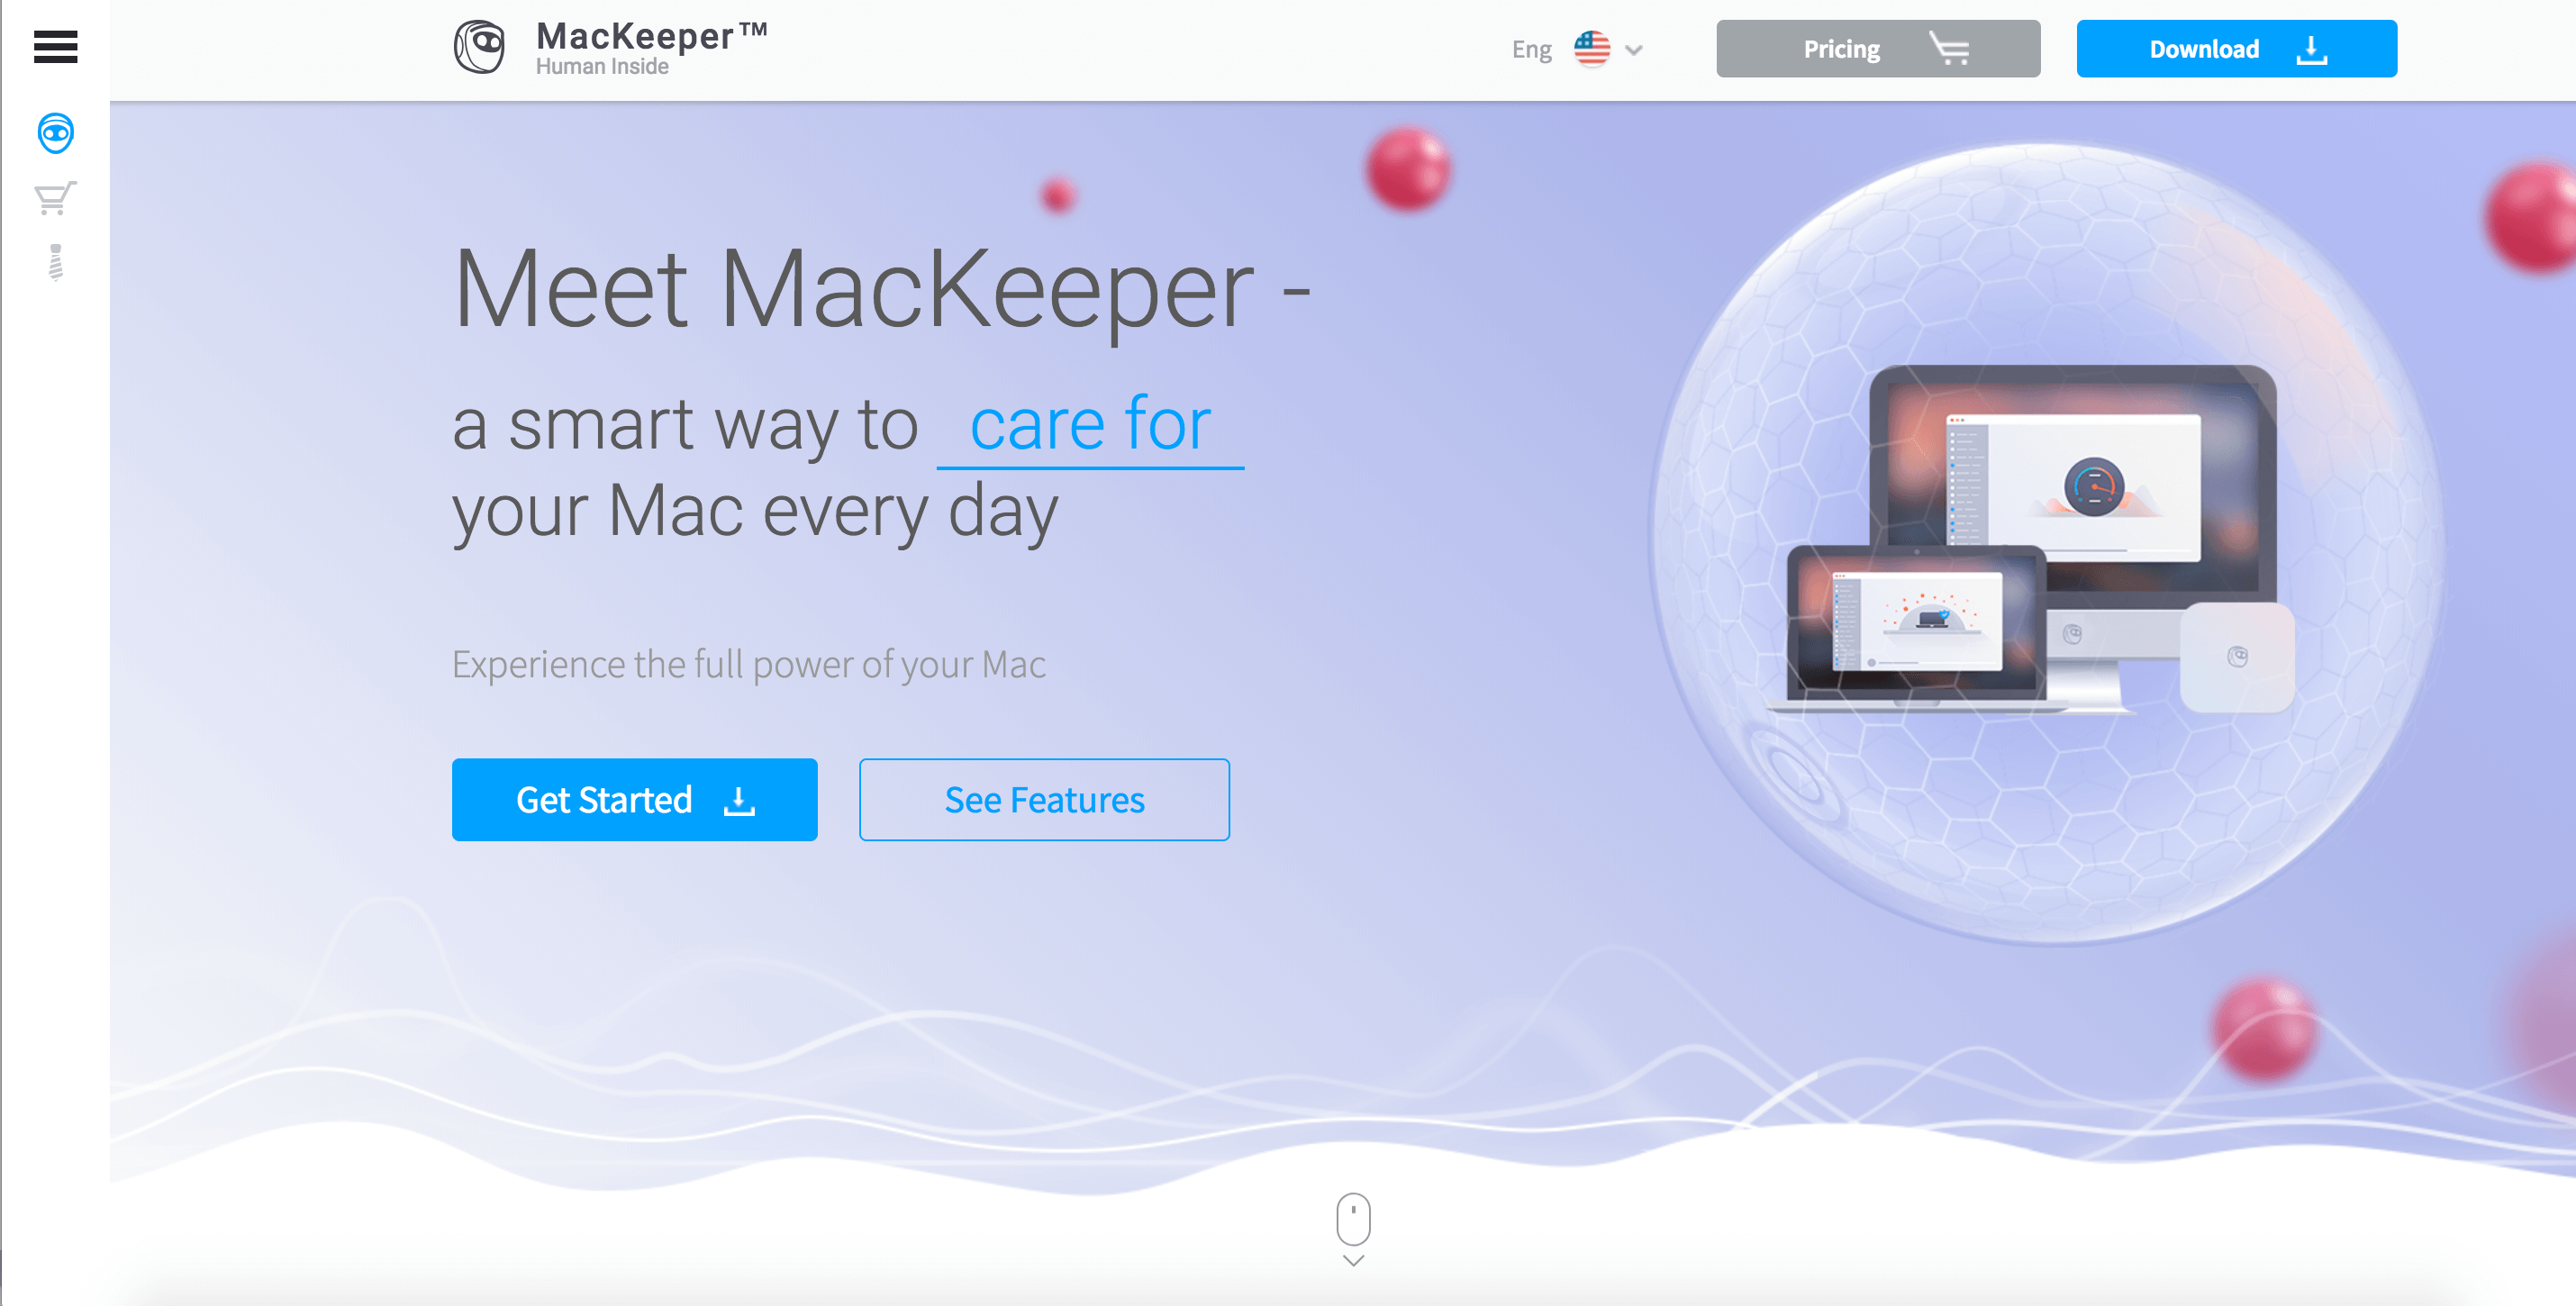 mackeeper keeps popping up